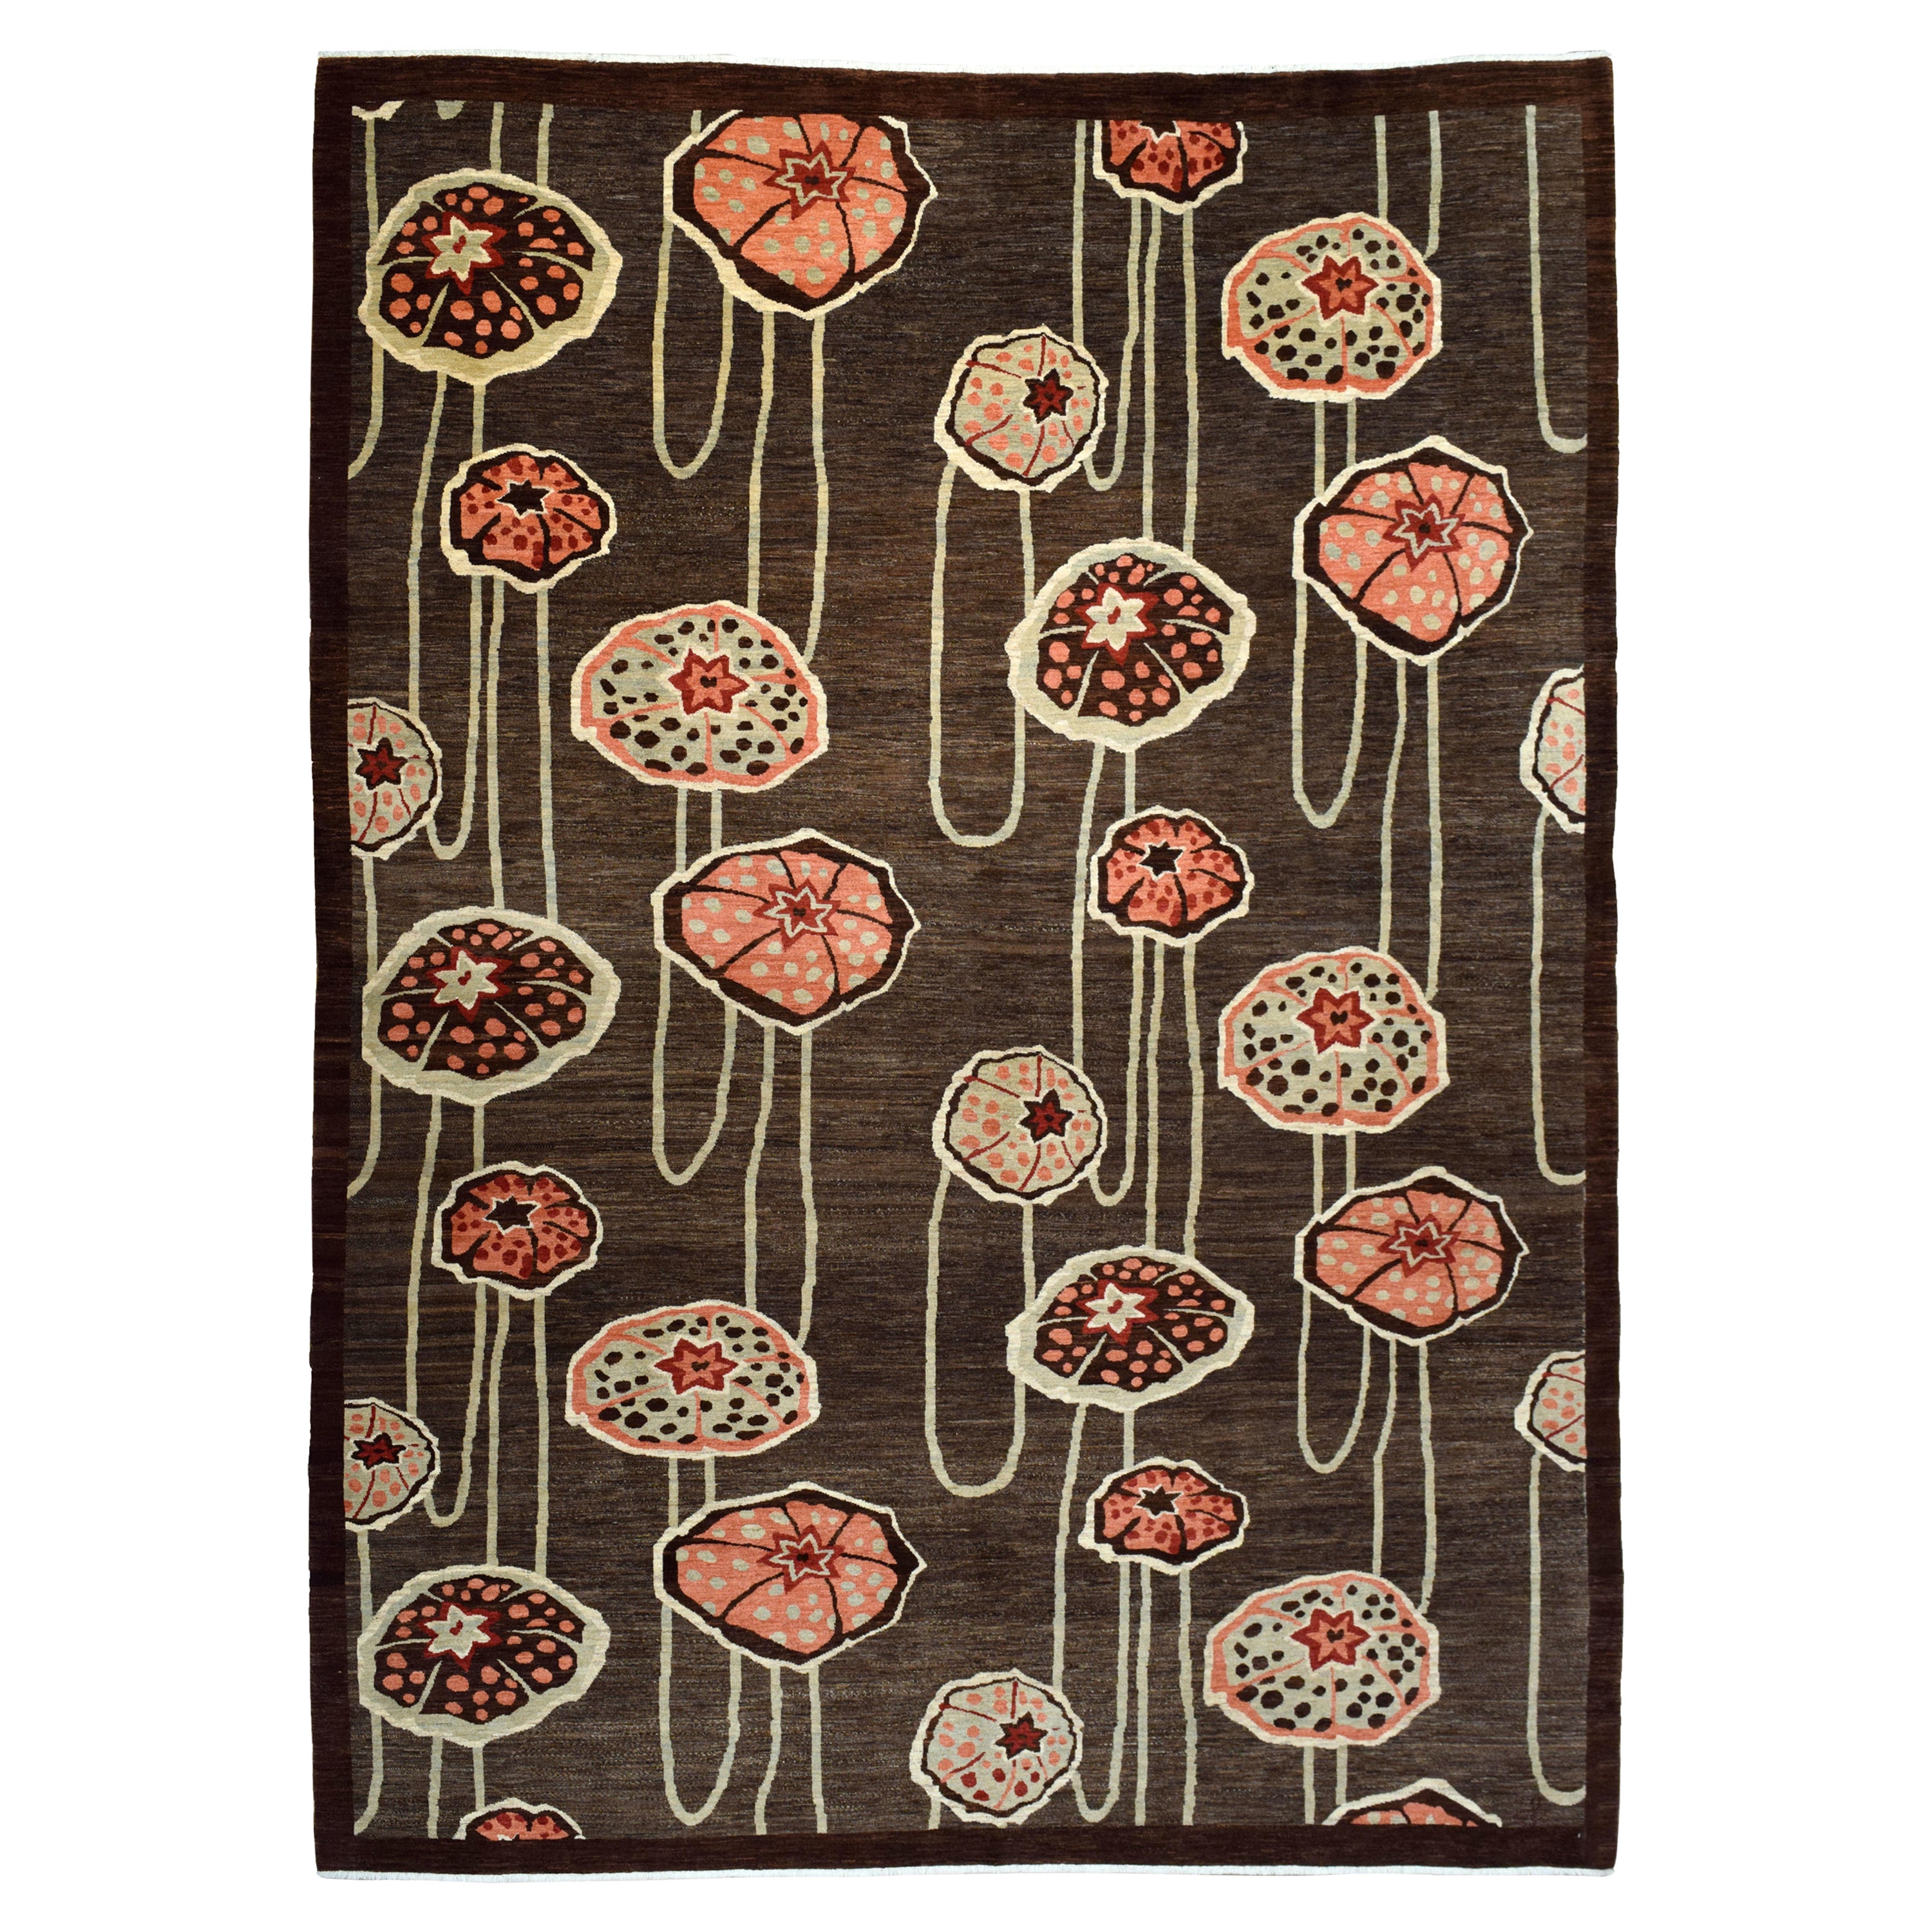 Orley Shabahang, Art Deco Wool Persian Rug, Pink, Green, Cream, Brown, 10’ x 14’